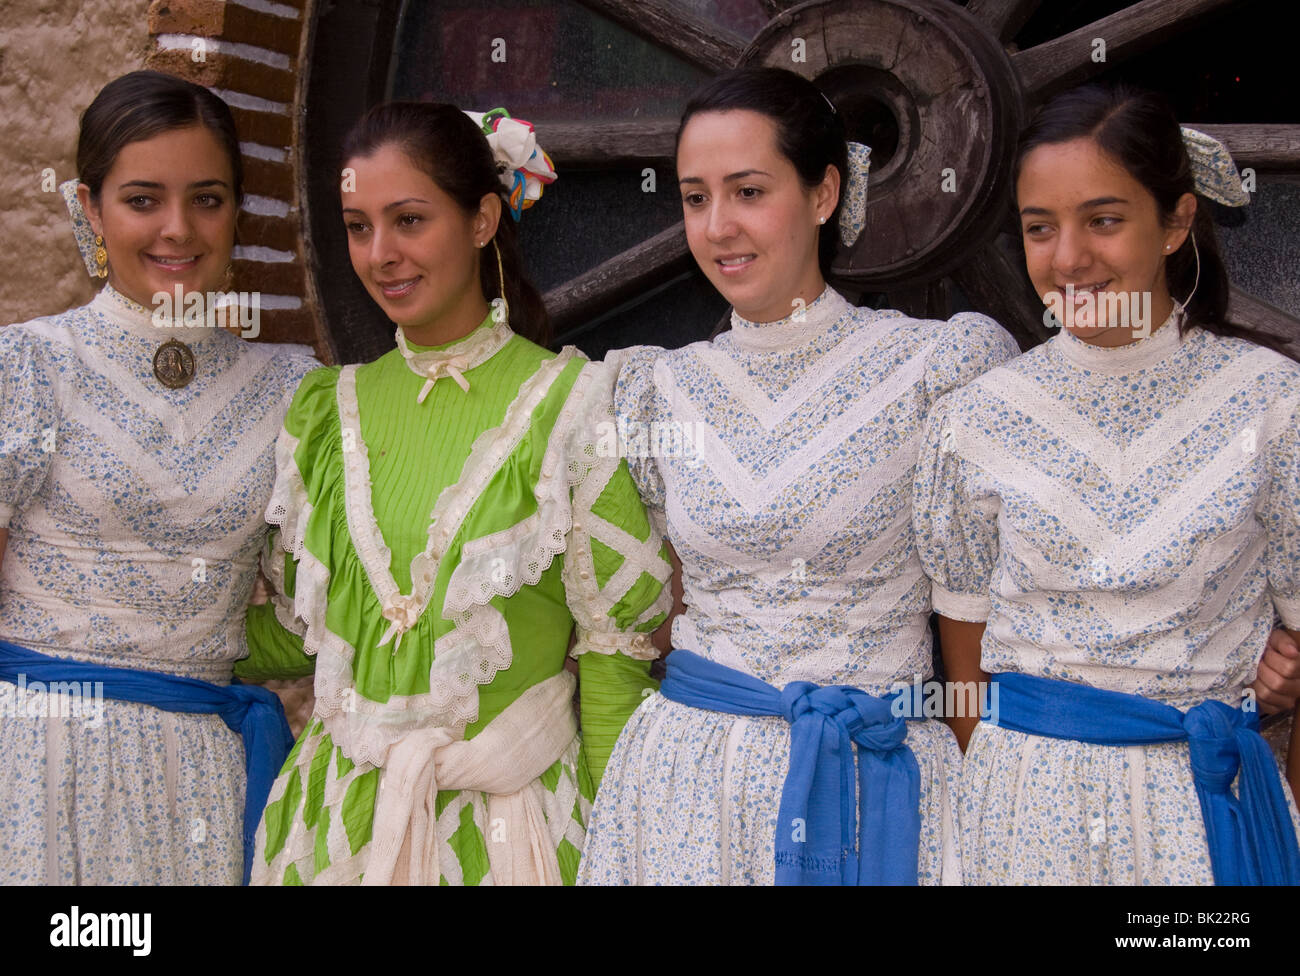 Senoritas in traditional Mexican dresses in Guadalajara, Jalisco, Mexico Stock Photo